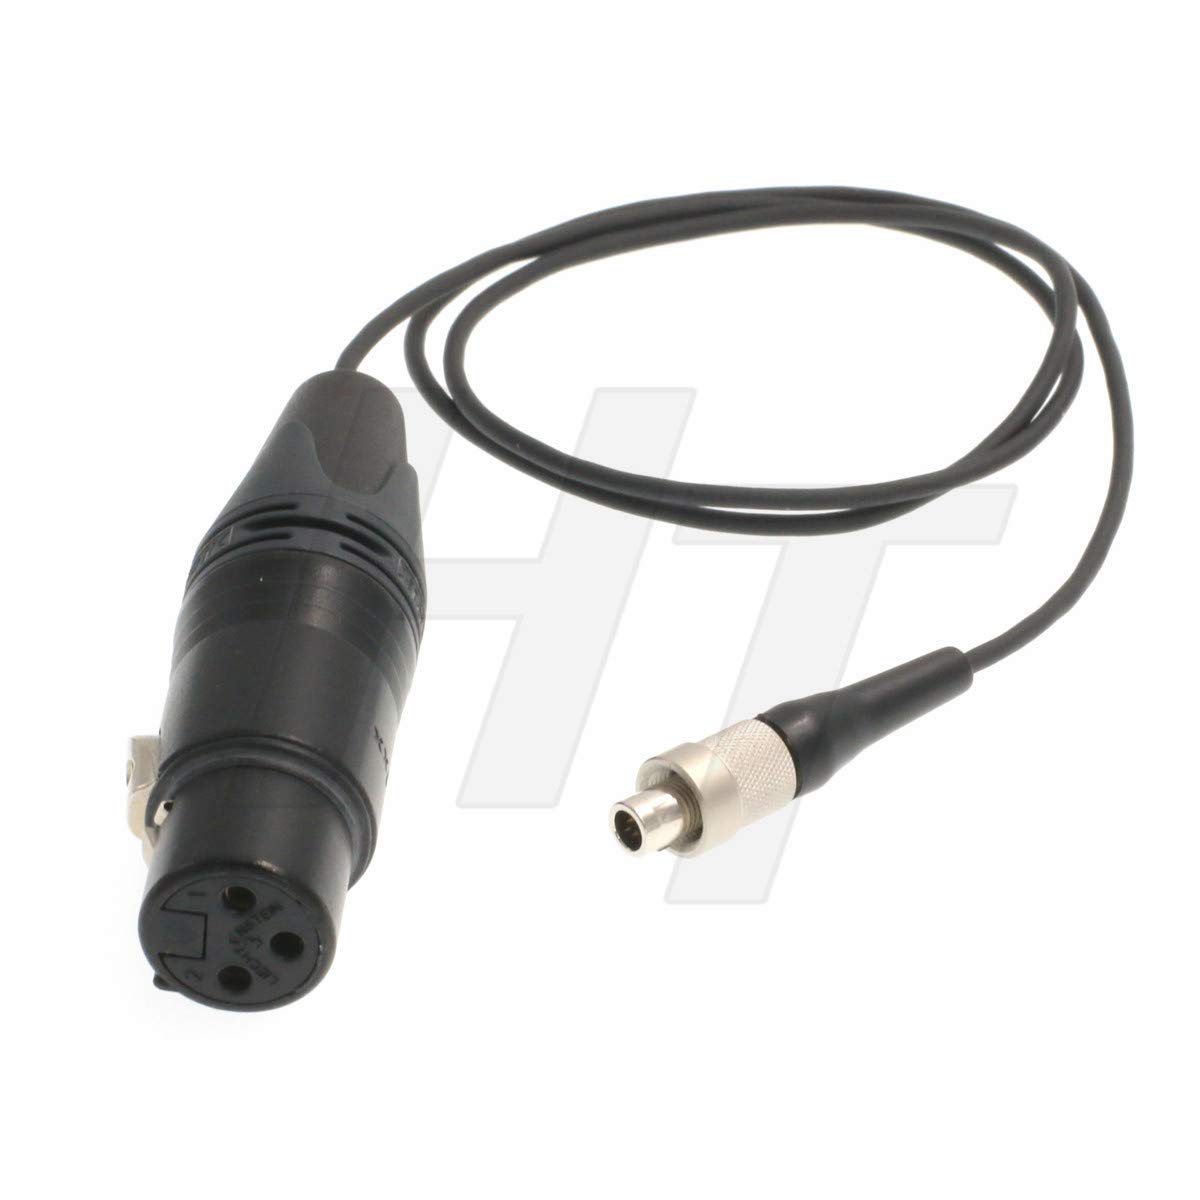 Mikrofon Audio XLR 3 Pin auf FVB 00B 3 Pin Kabel für Sennheiser SK50 SK250 SK2000 Transmitter (80 cm)